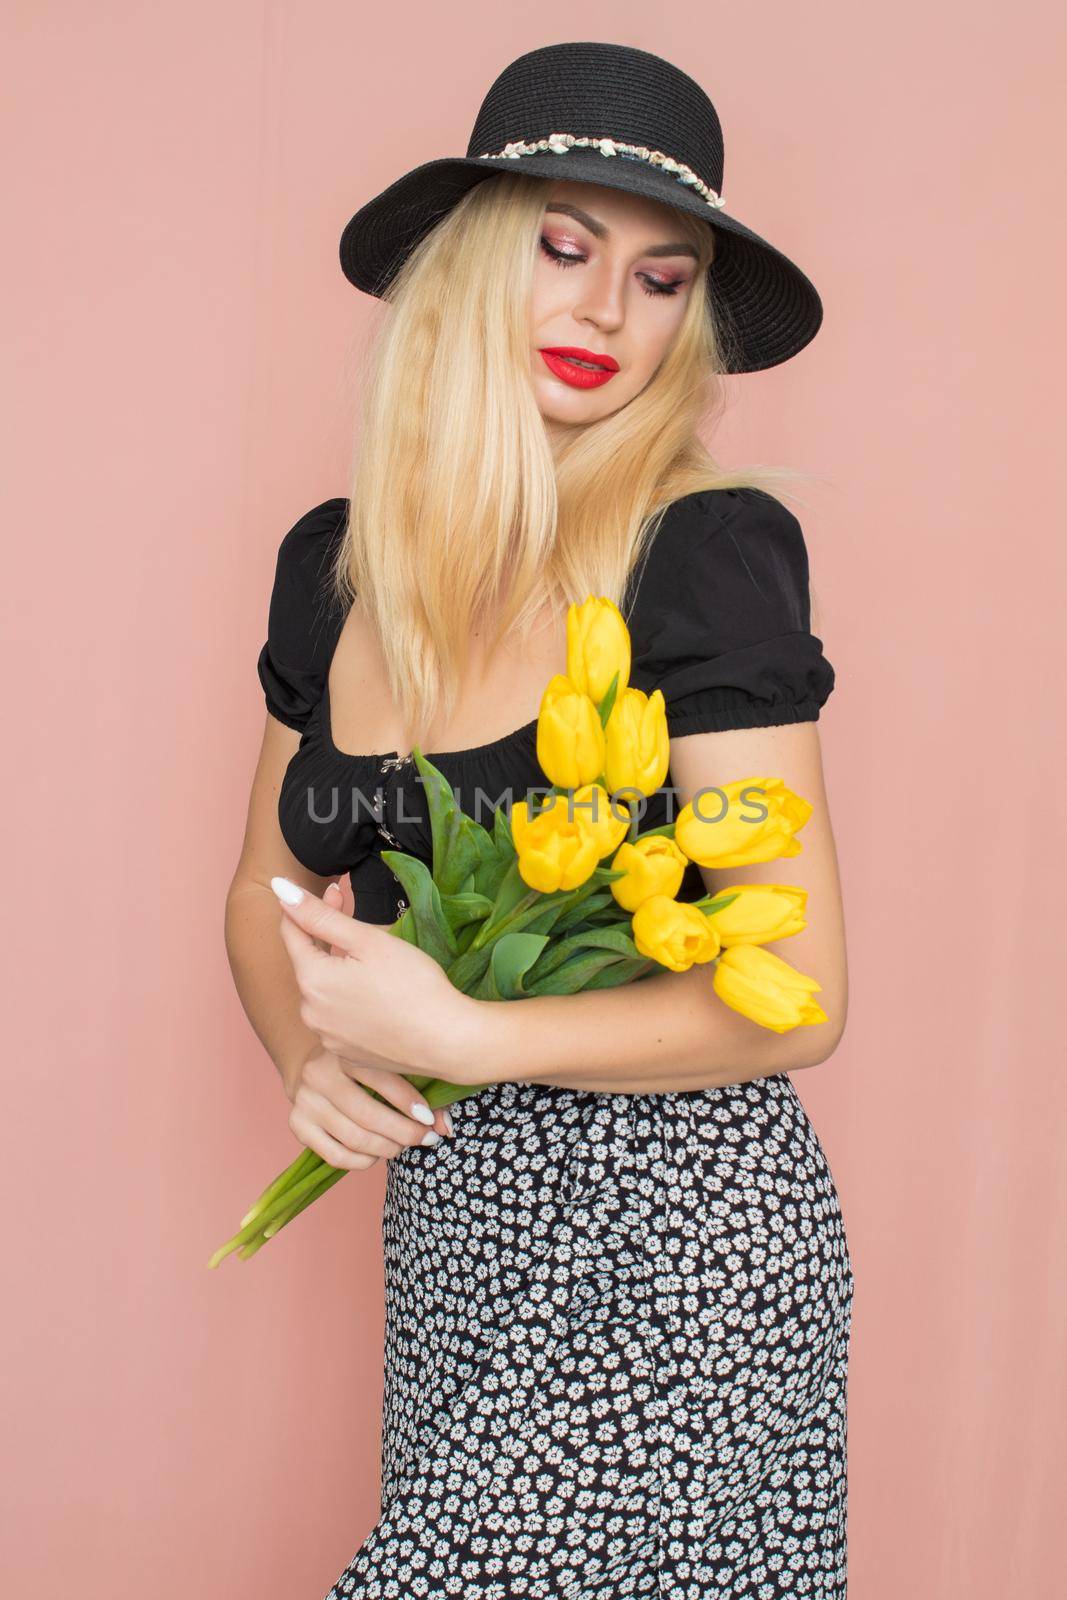 Blonde woman in black hat holding yellow tulips by Bonda